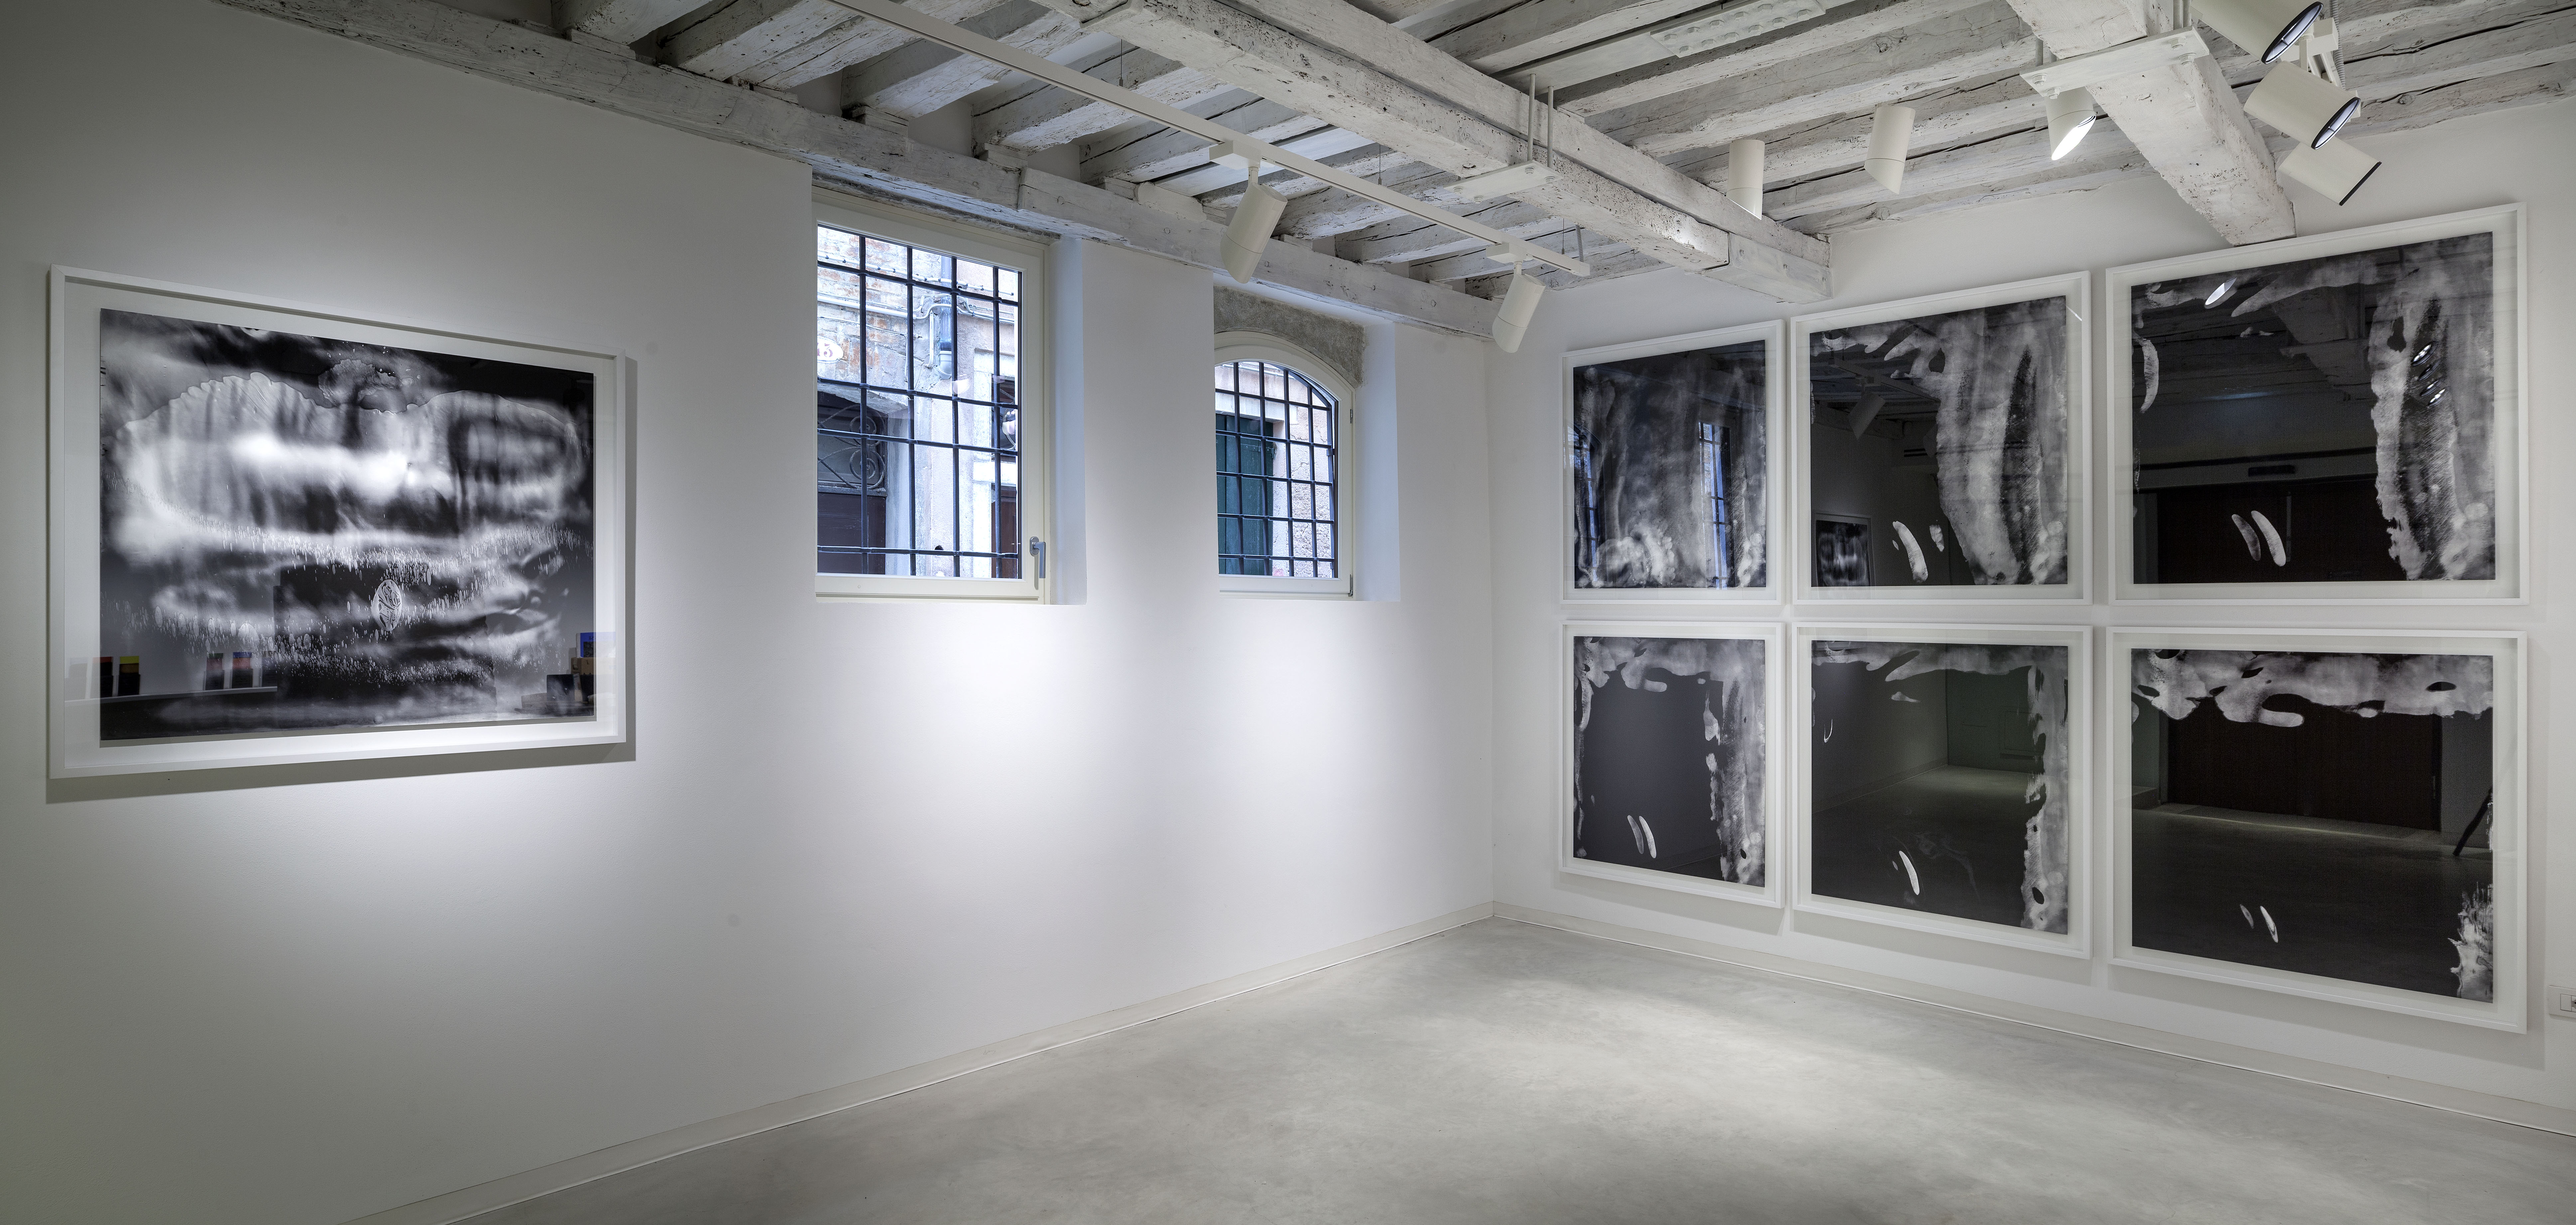 Installation view, Marignana Arte, Hour-Glass, Alessandro Diaz De Santillana & Laura De Santillana, Untitled, 2014, Digital print on Hahnemuhle paper